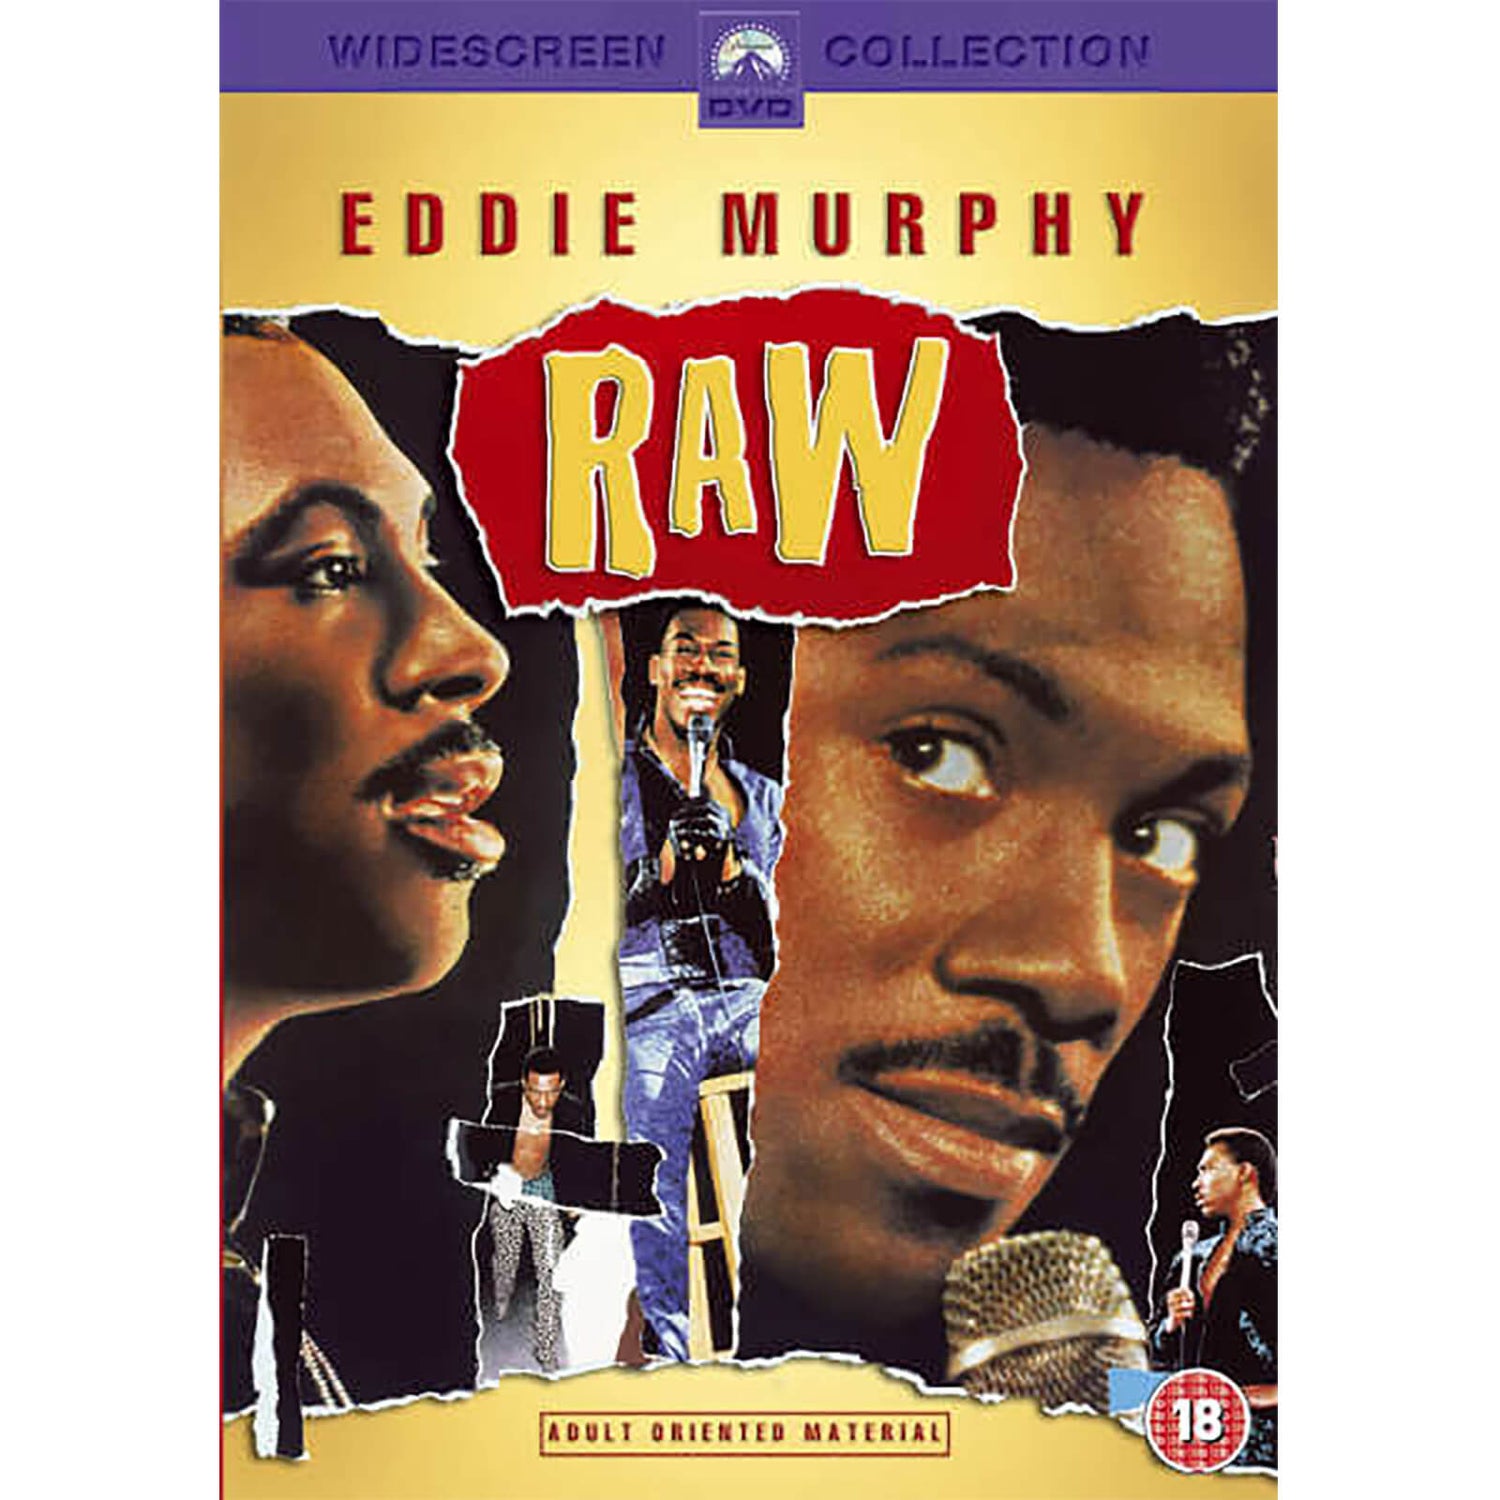 Eddie Murphy - Raw